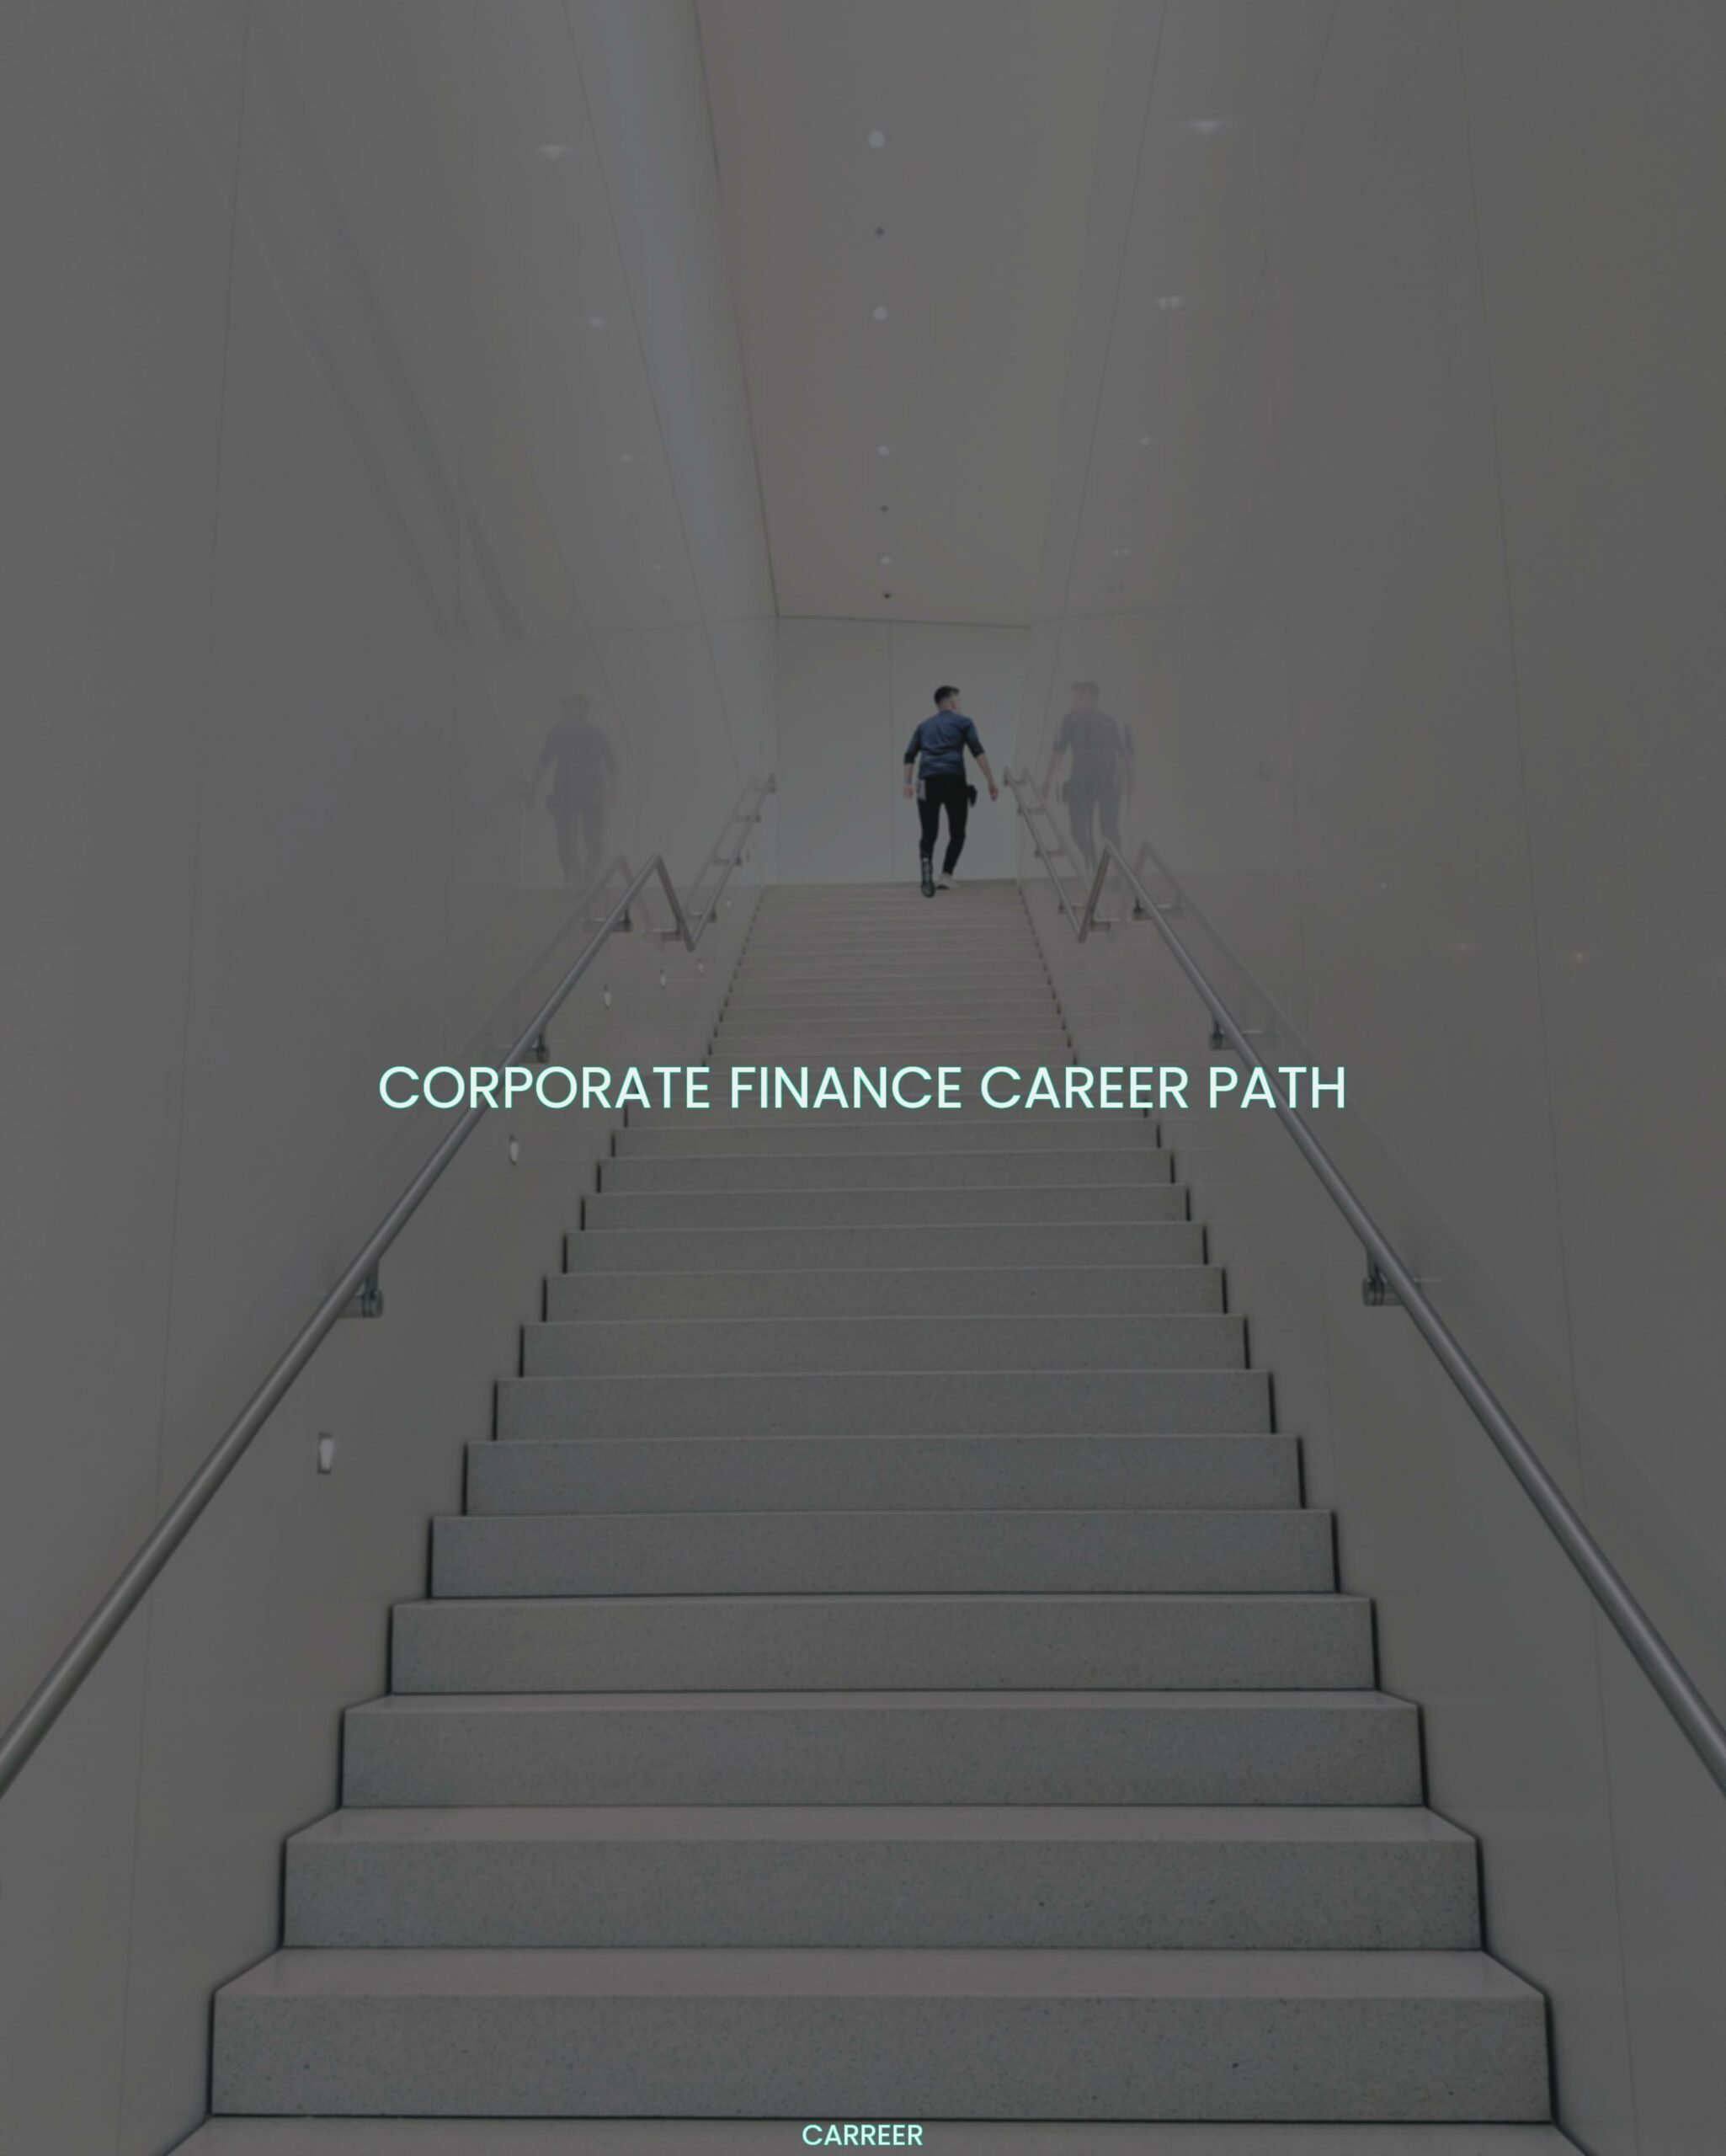 Corporate finance career path